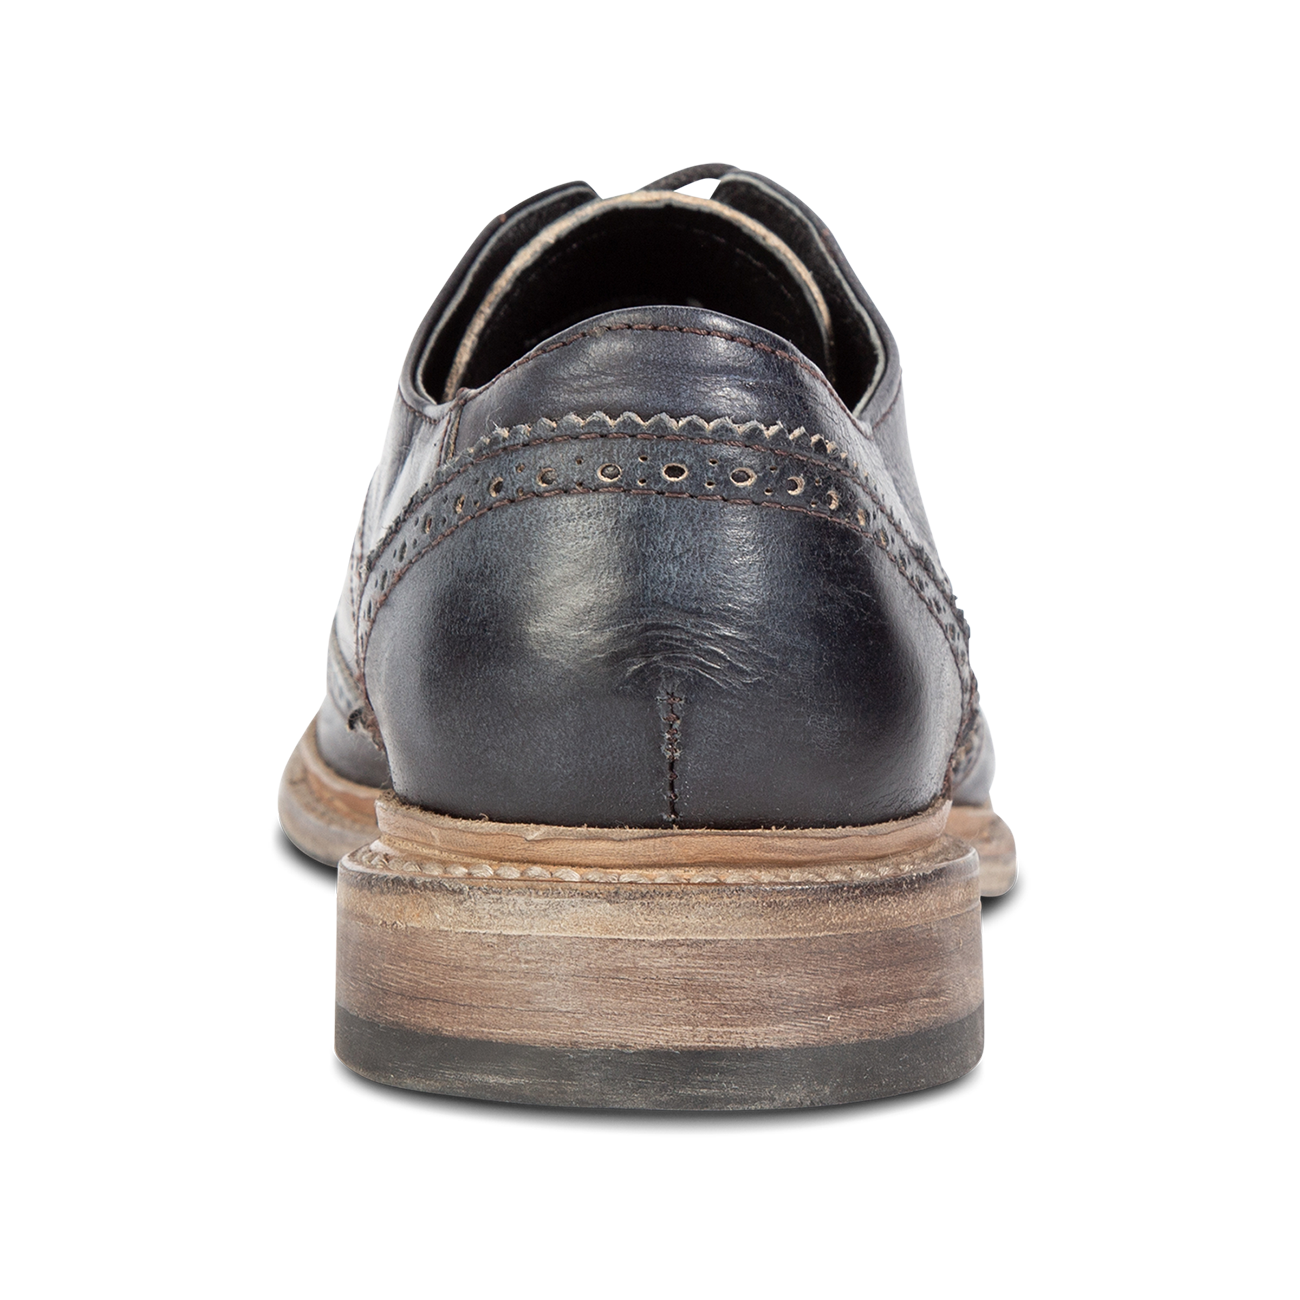 Back view showing low heel on FREEBIRD men's Kensington navy shoe